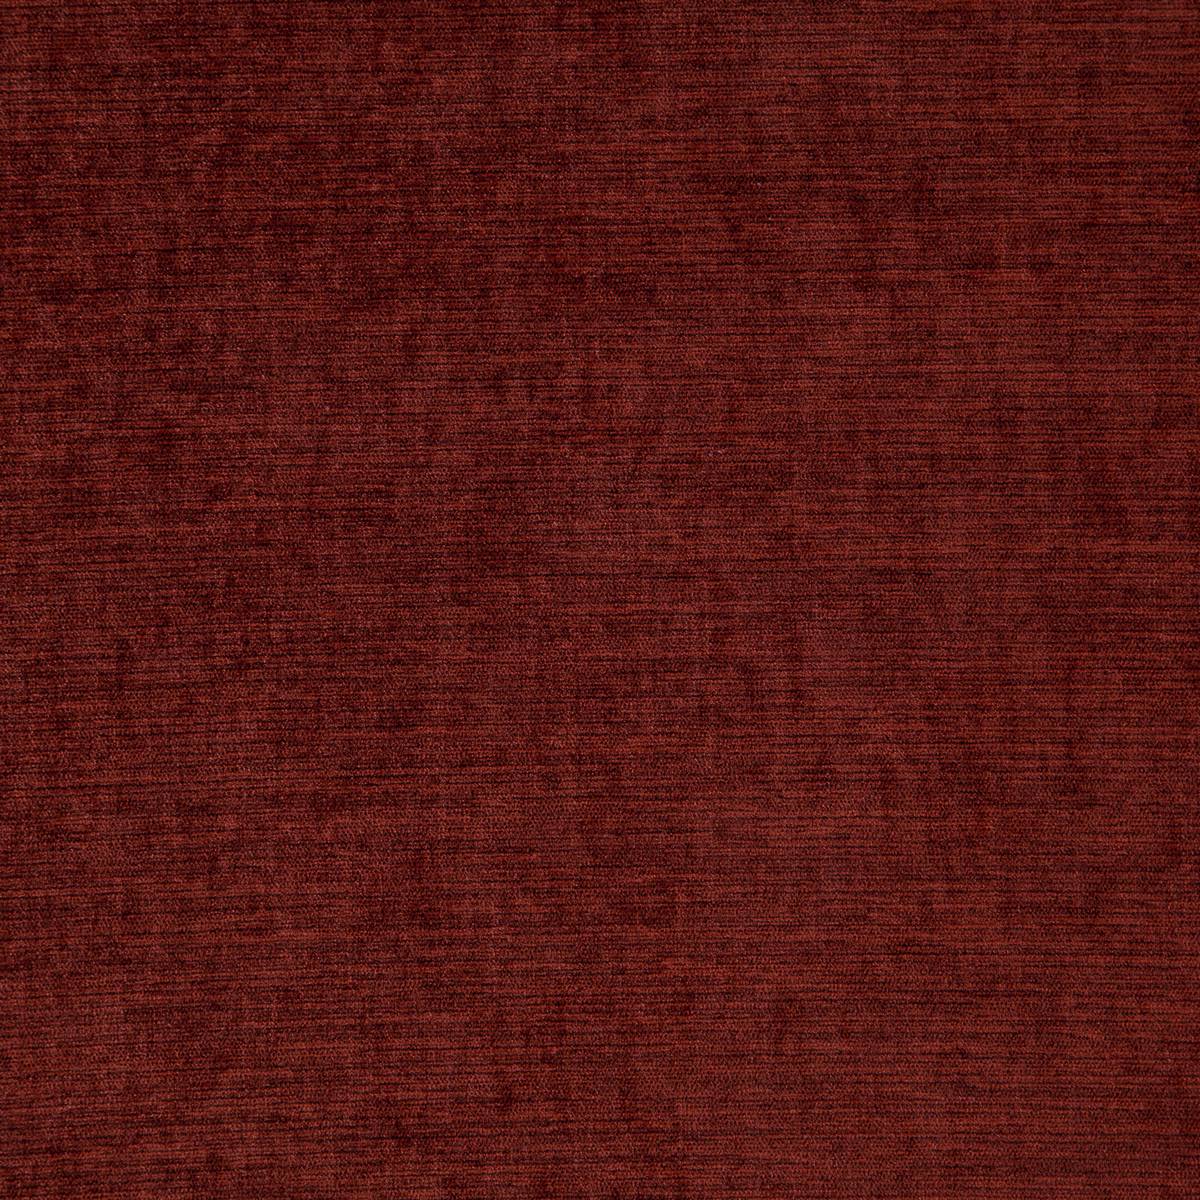 Tressillian Bordeaux Fabric by Prestigious Textiles